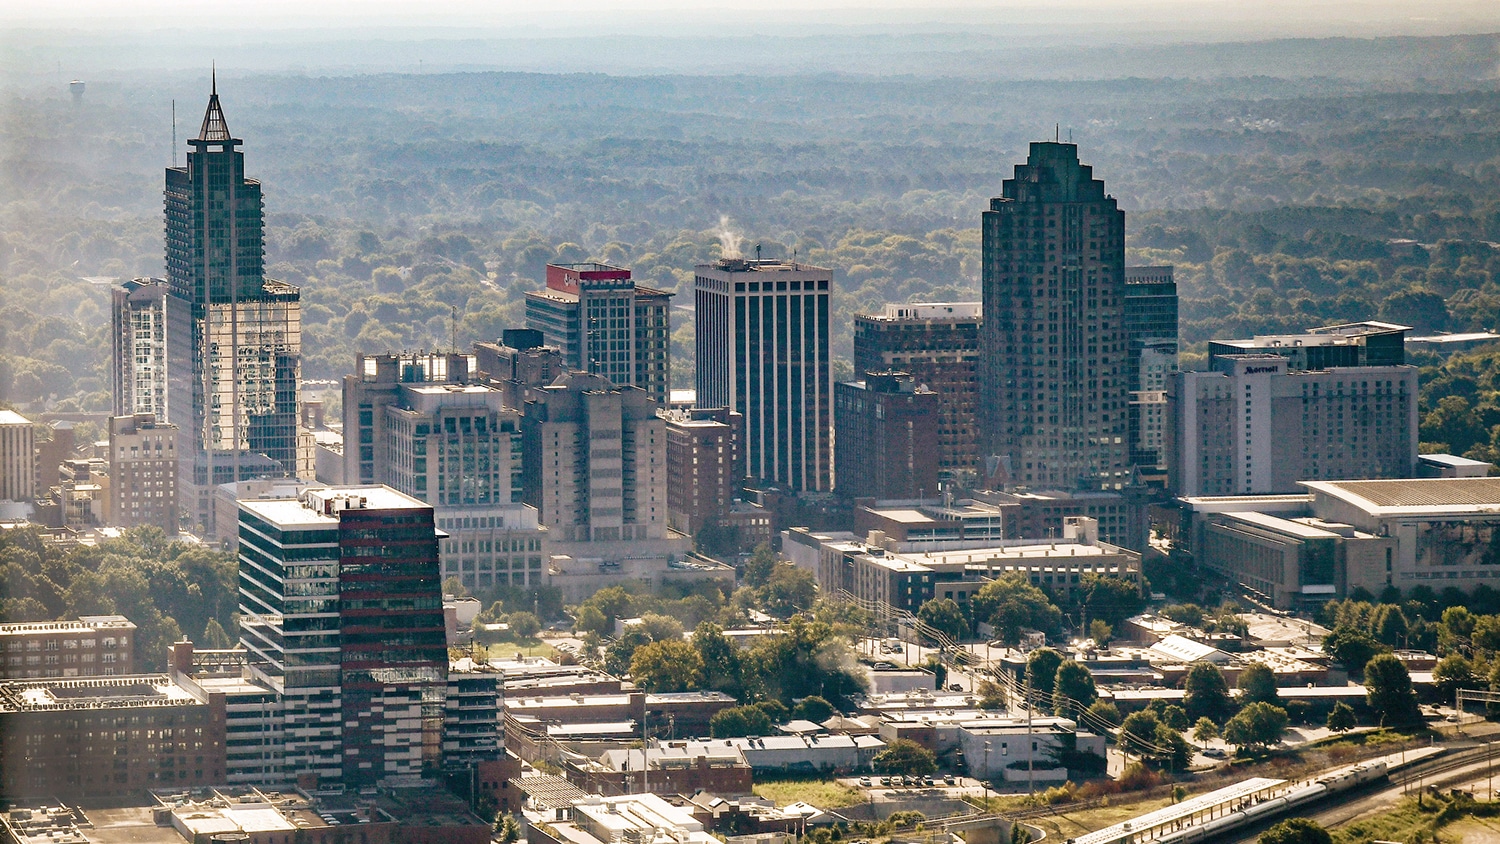 downtown Raleigh skyline